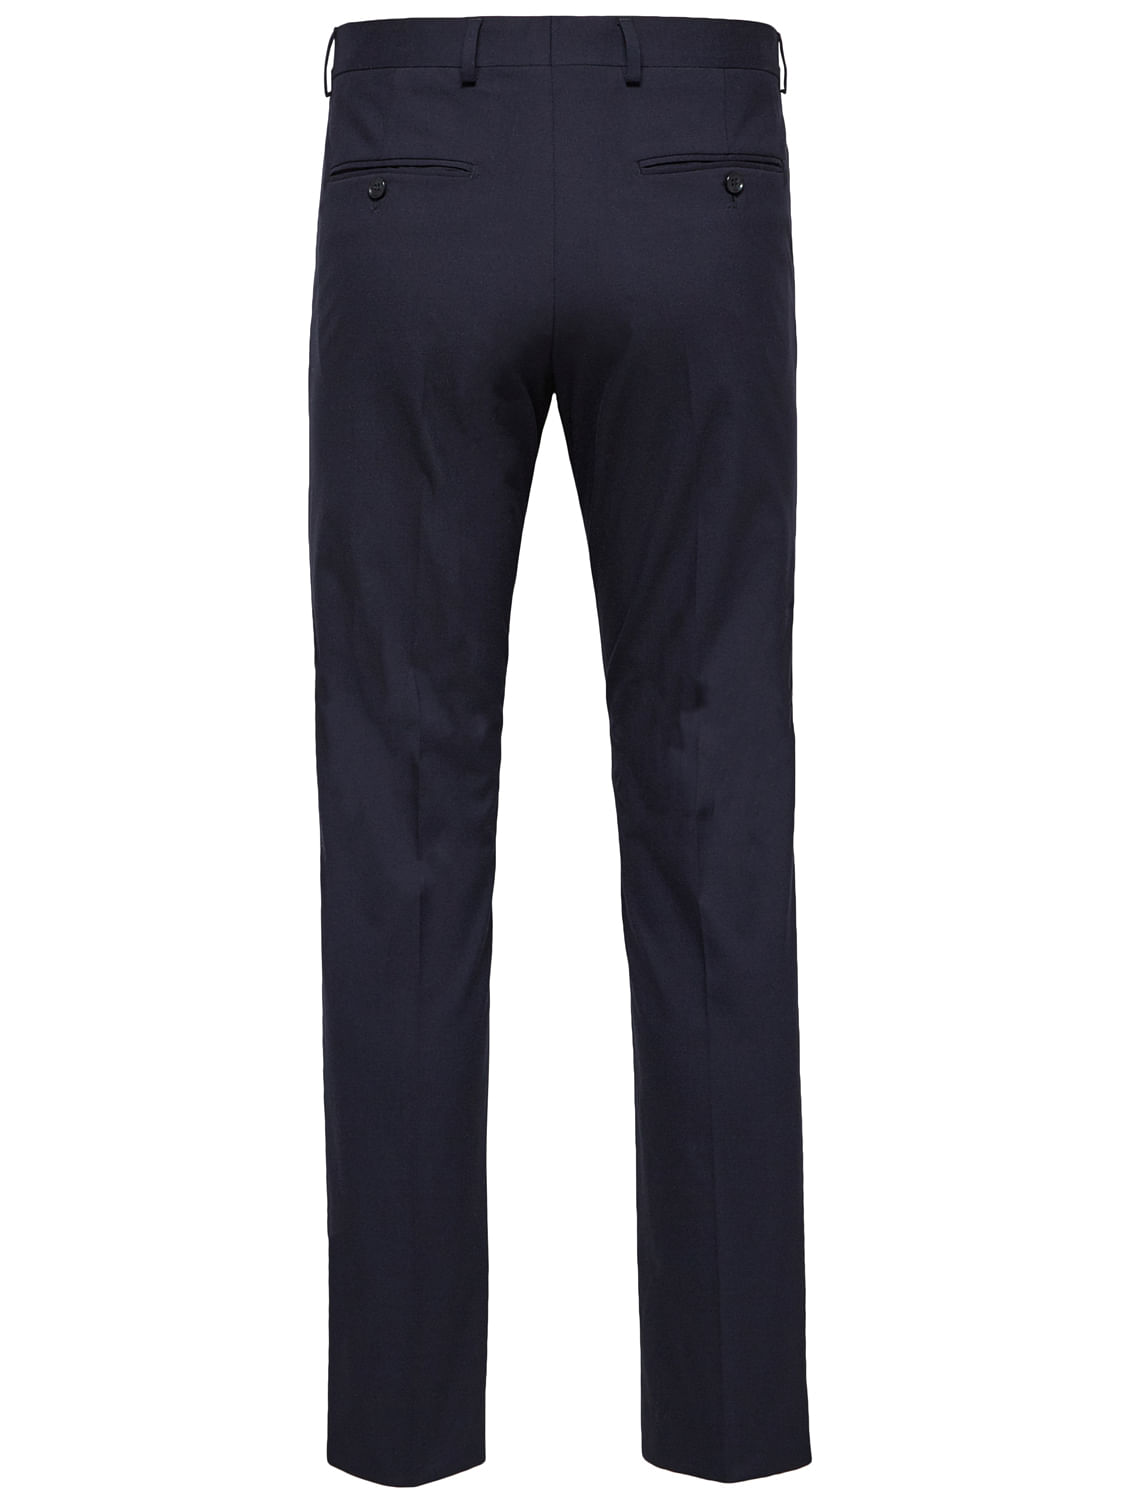 Oakland Navy Blue Slim Fit Pinstripe Pants | BOJONI